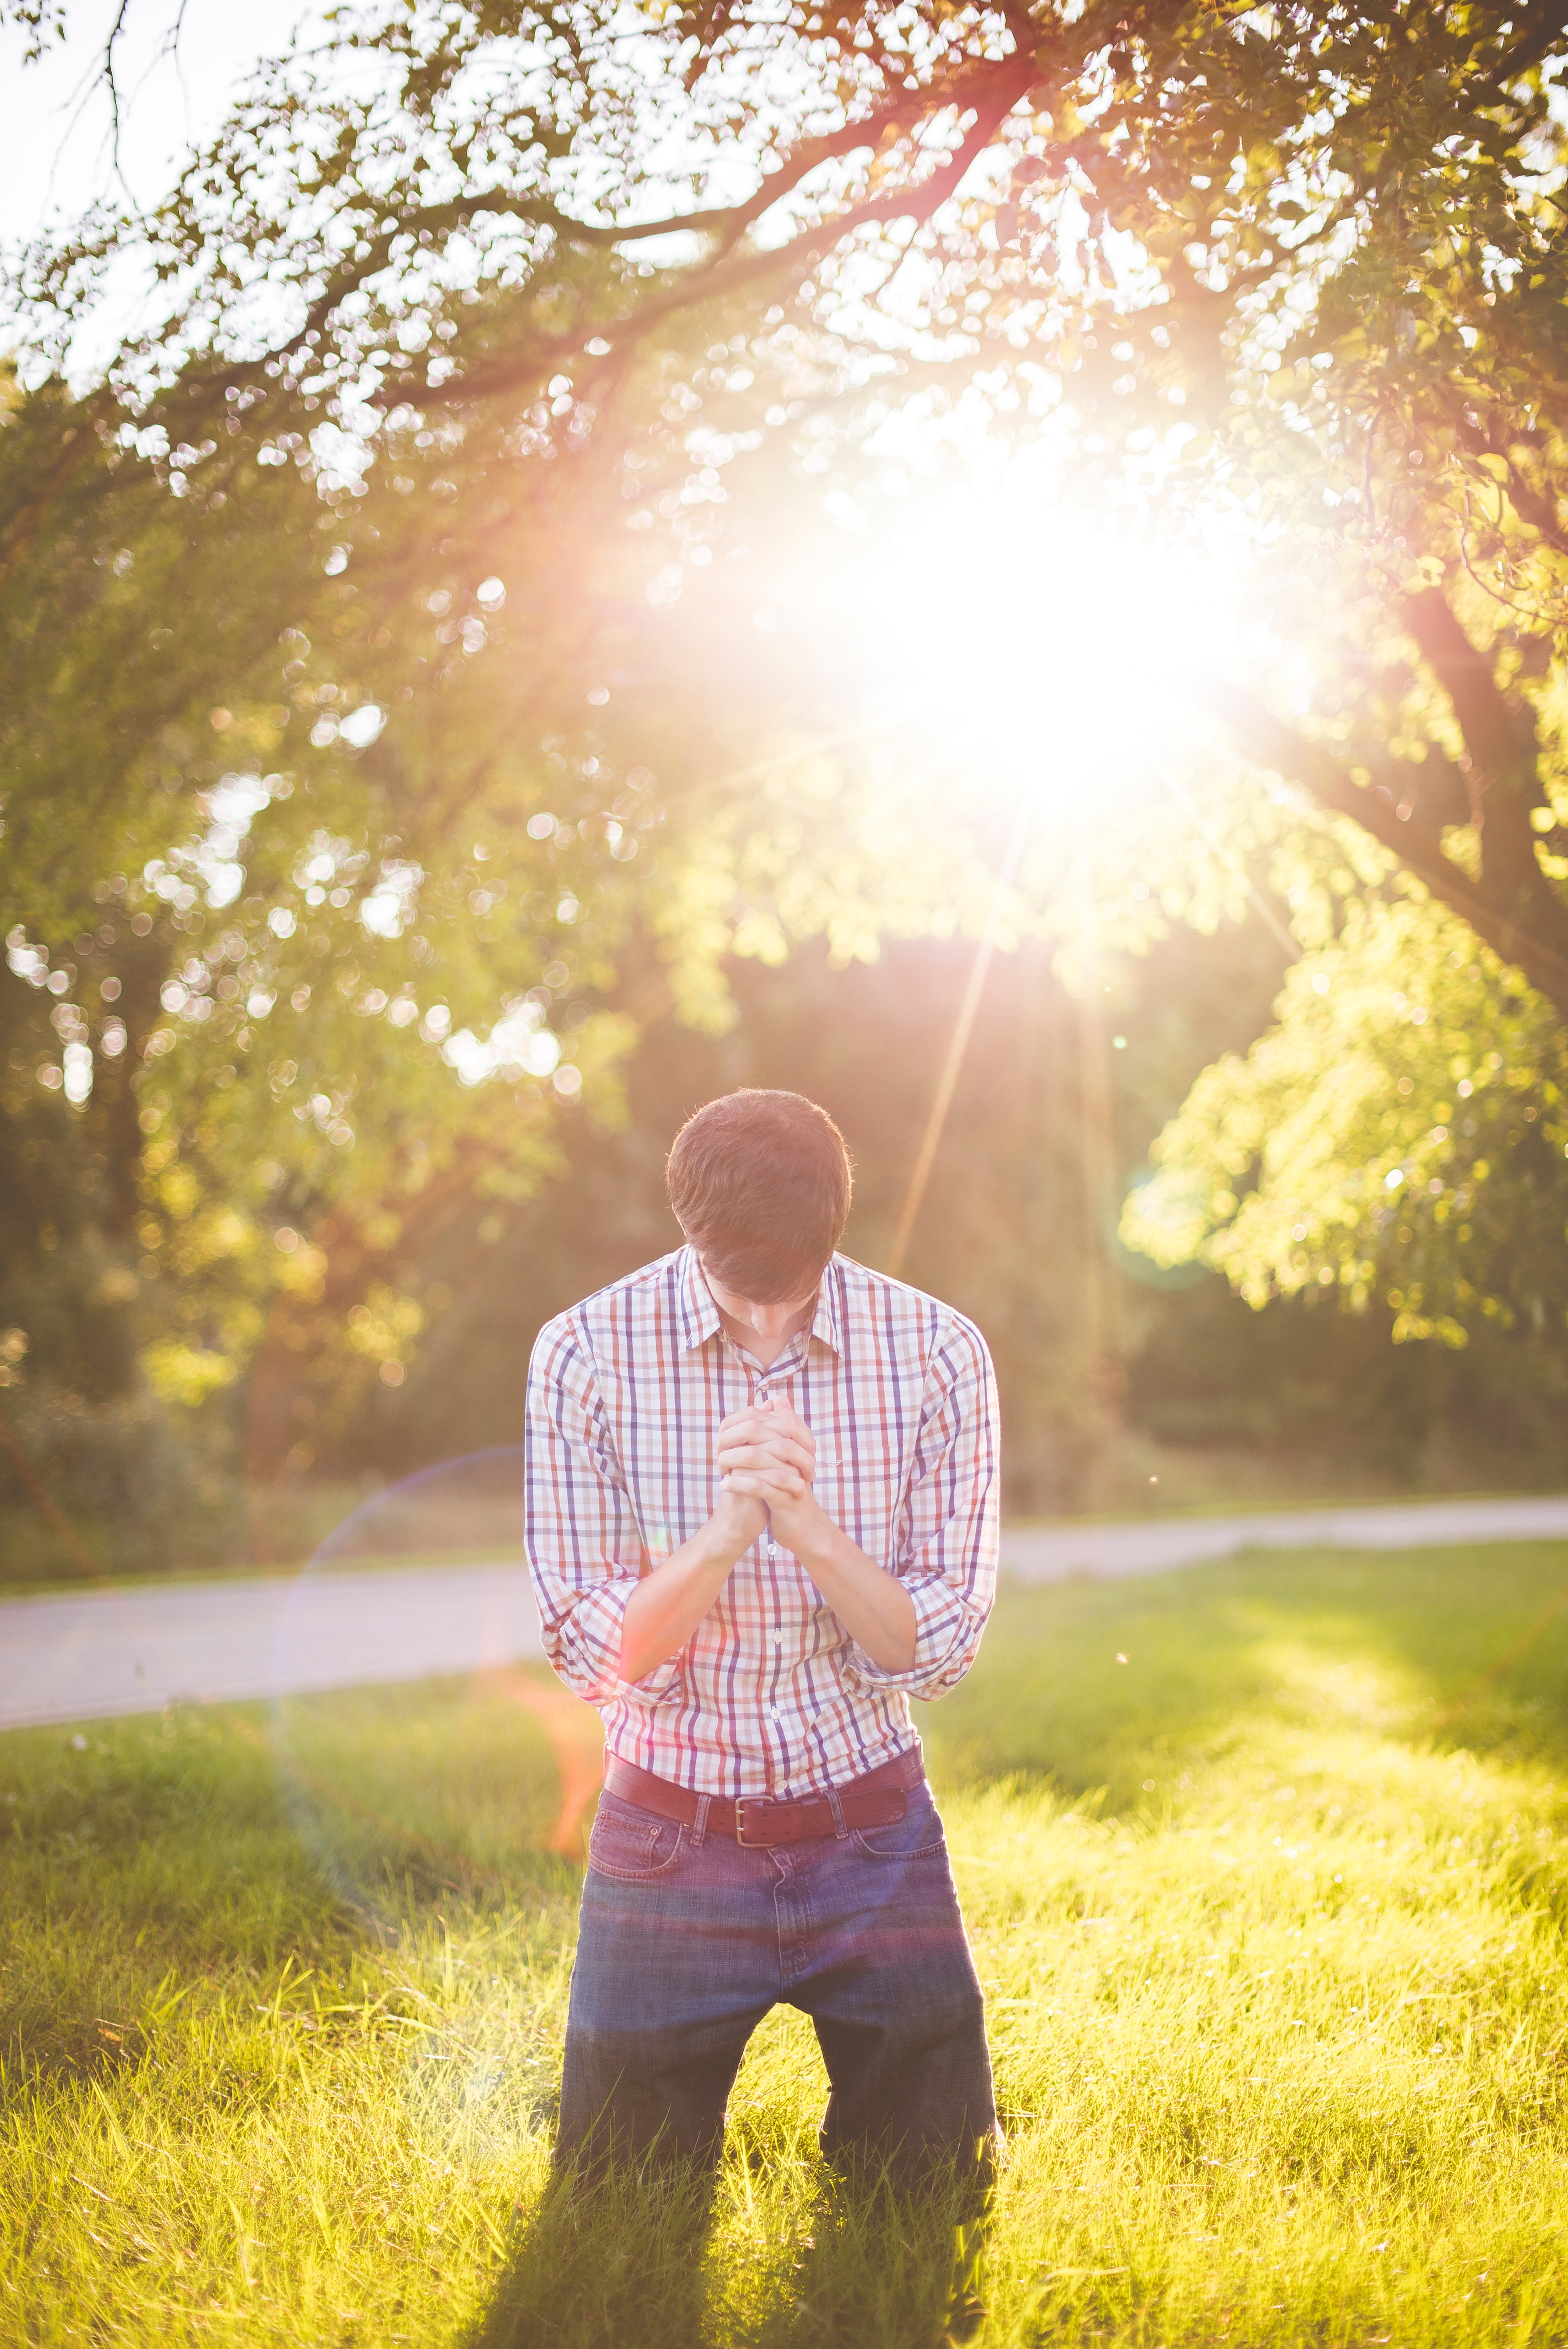 Медитация 11 11. Человек и природа. Парень солнце. Мужчина на природе. Человек молится на природе.